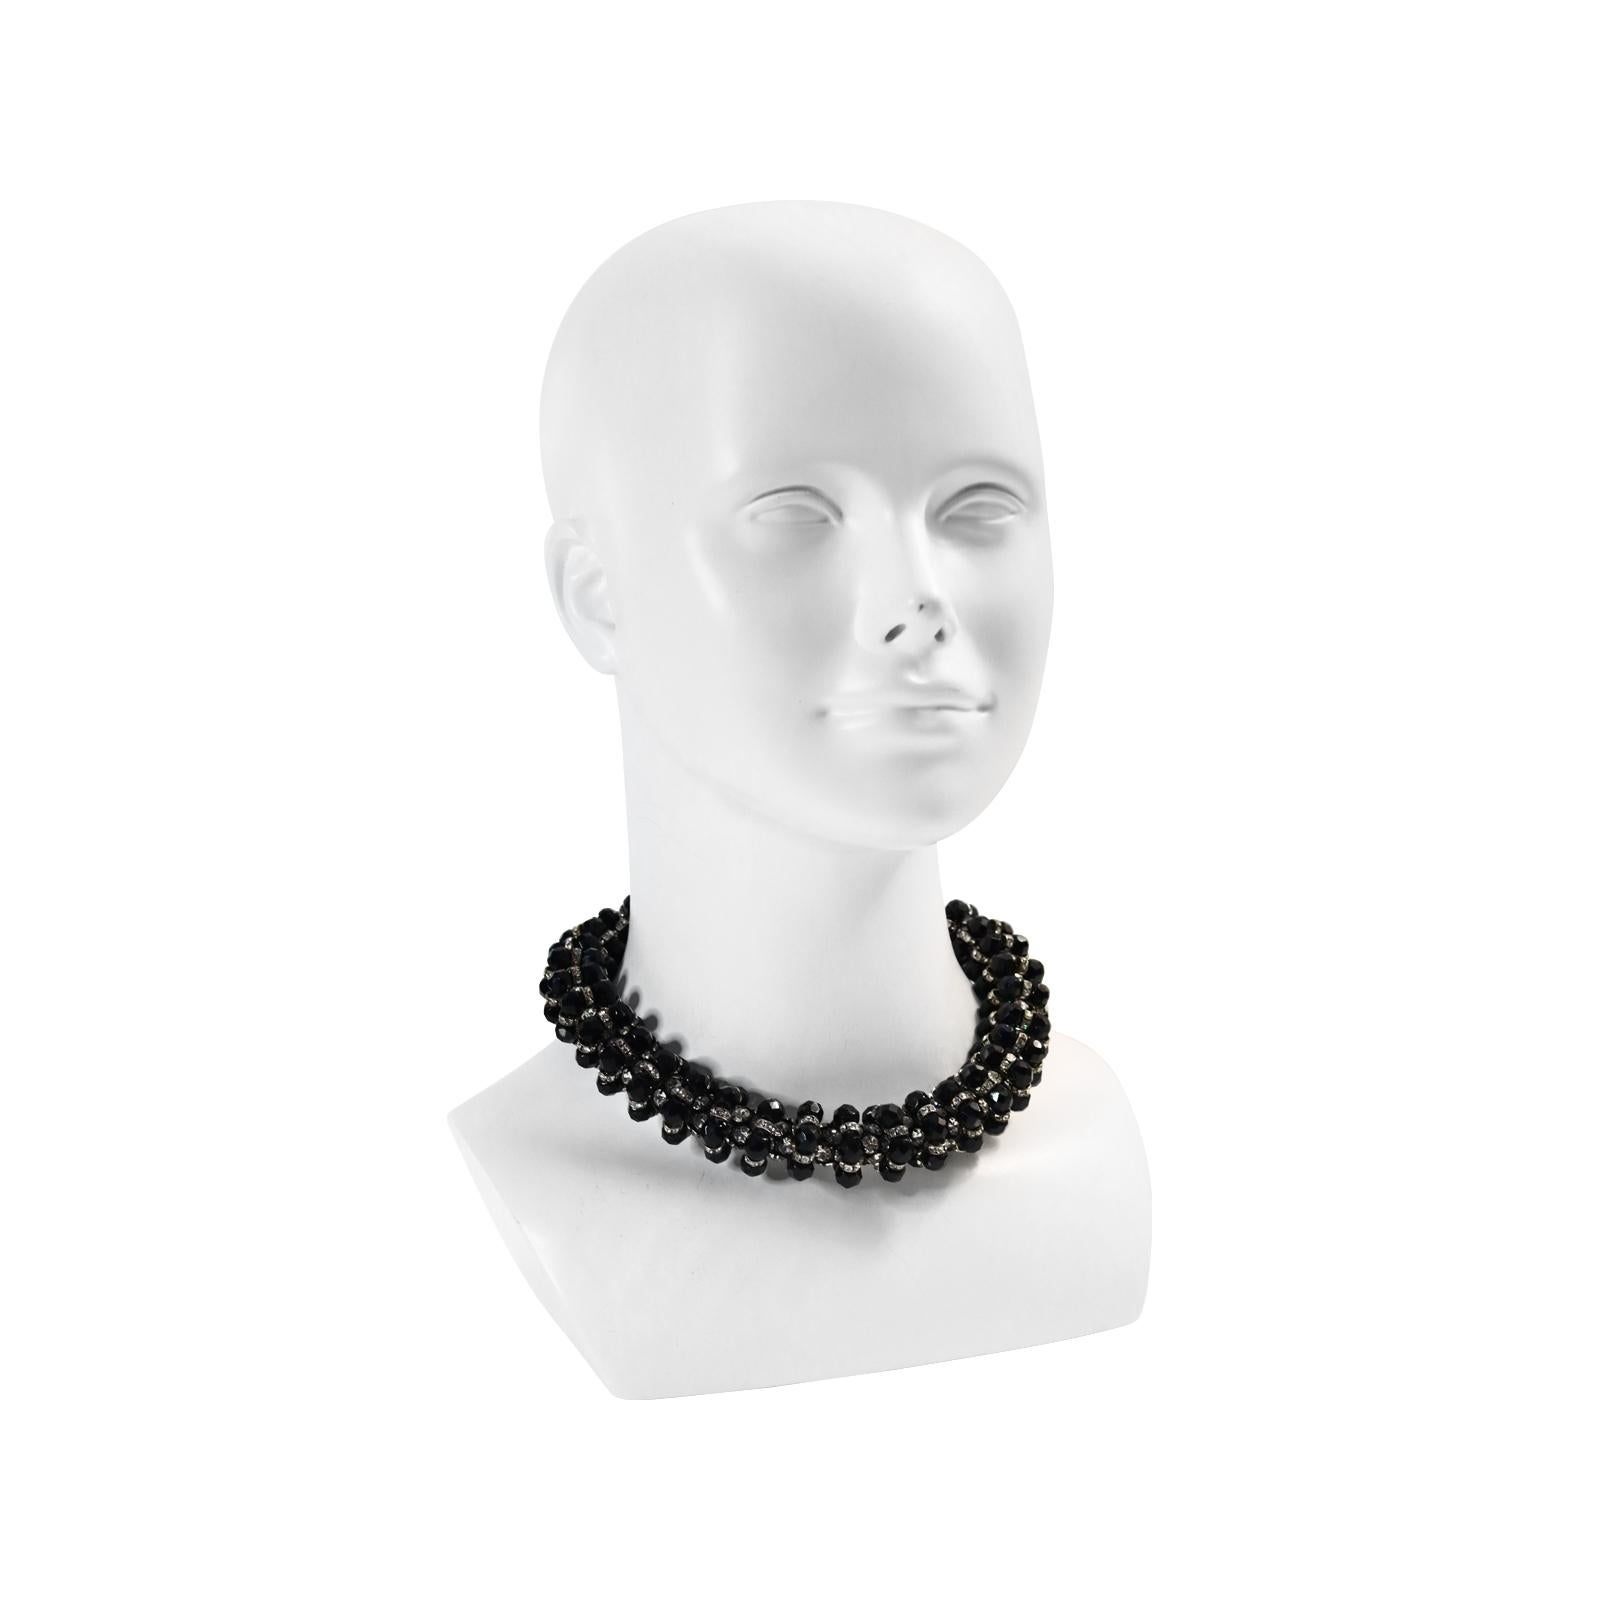 black bead choker necklace